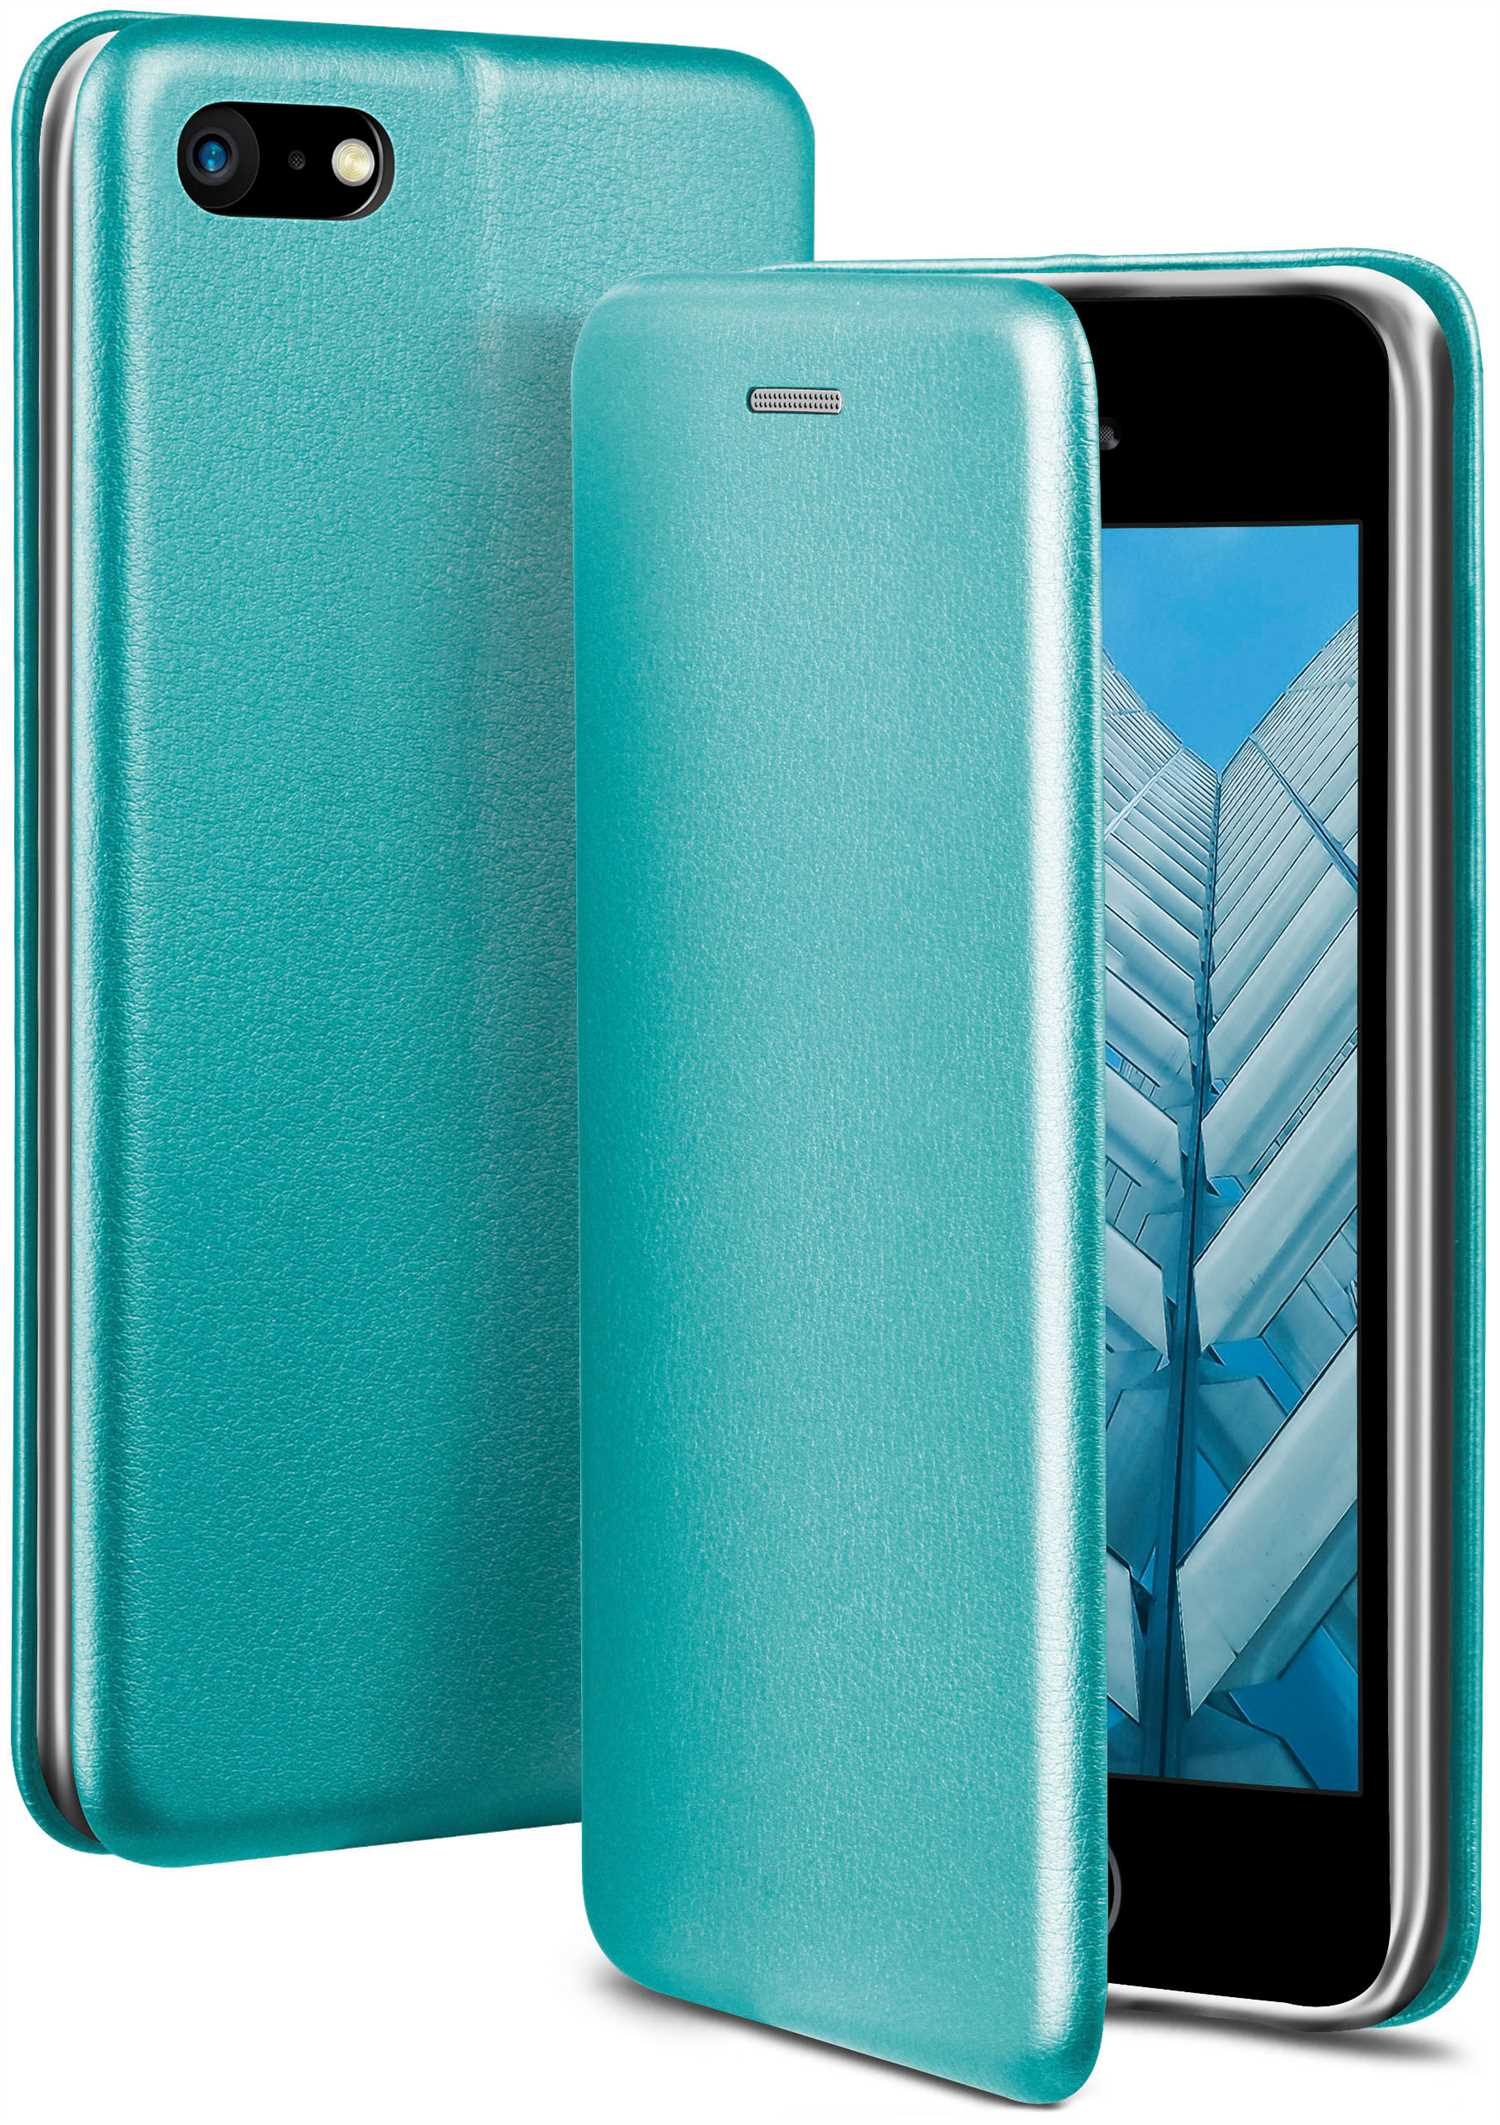 Flip ONEFLOW iPhone 5s, - Business Cover, Blue Worldwide Apple, Case,